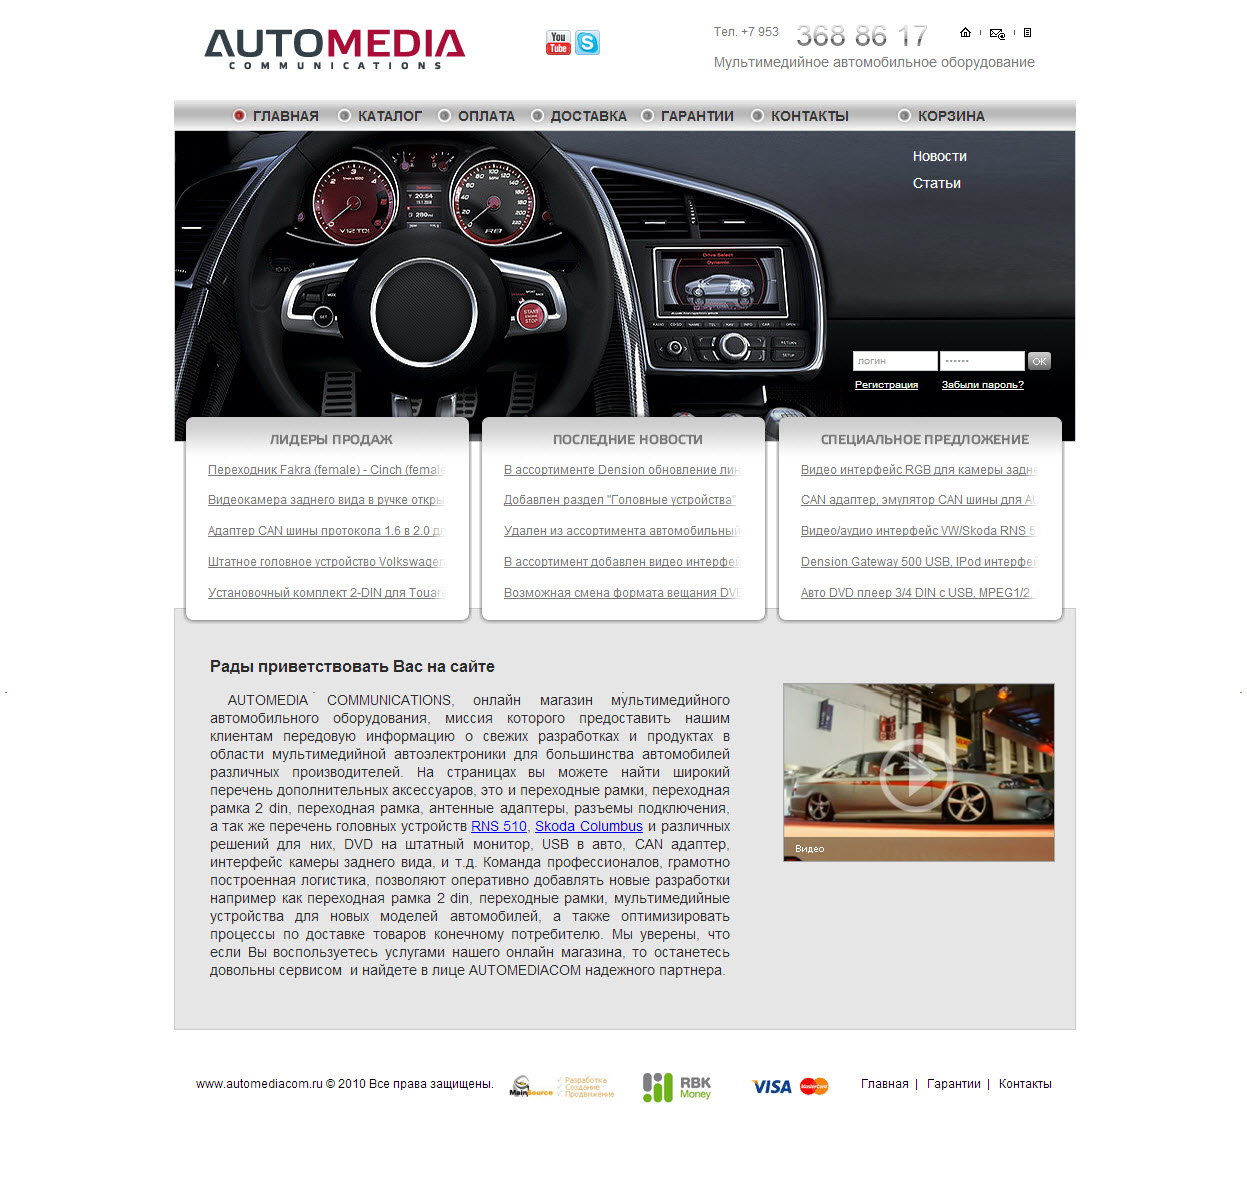 Сайт компании по автозвуку AUTOMEDIA COMMUNICATIONS